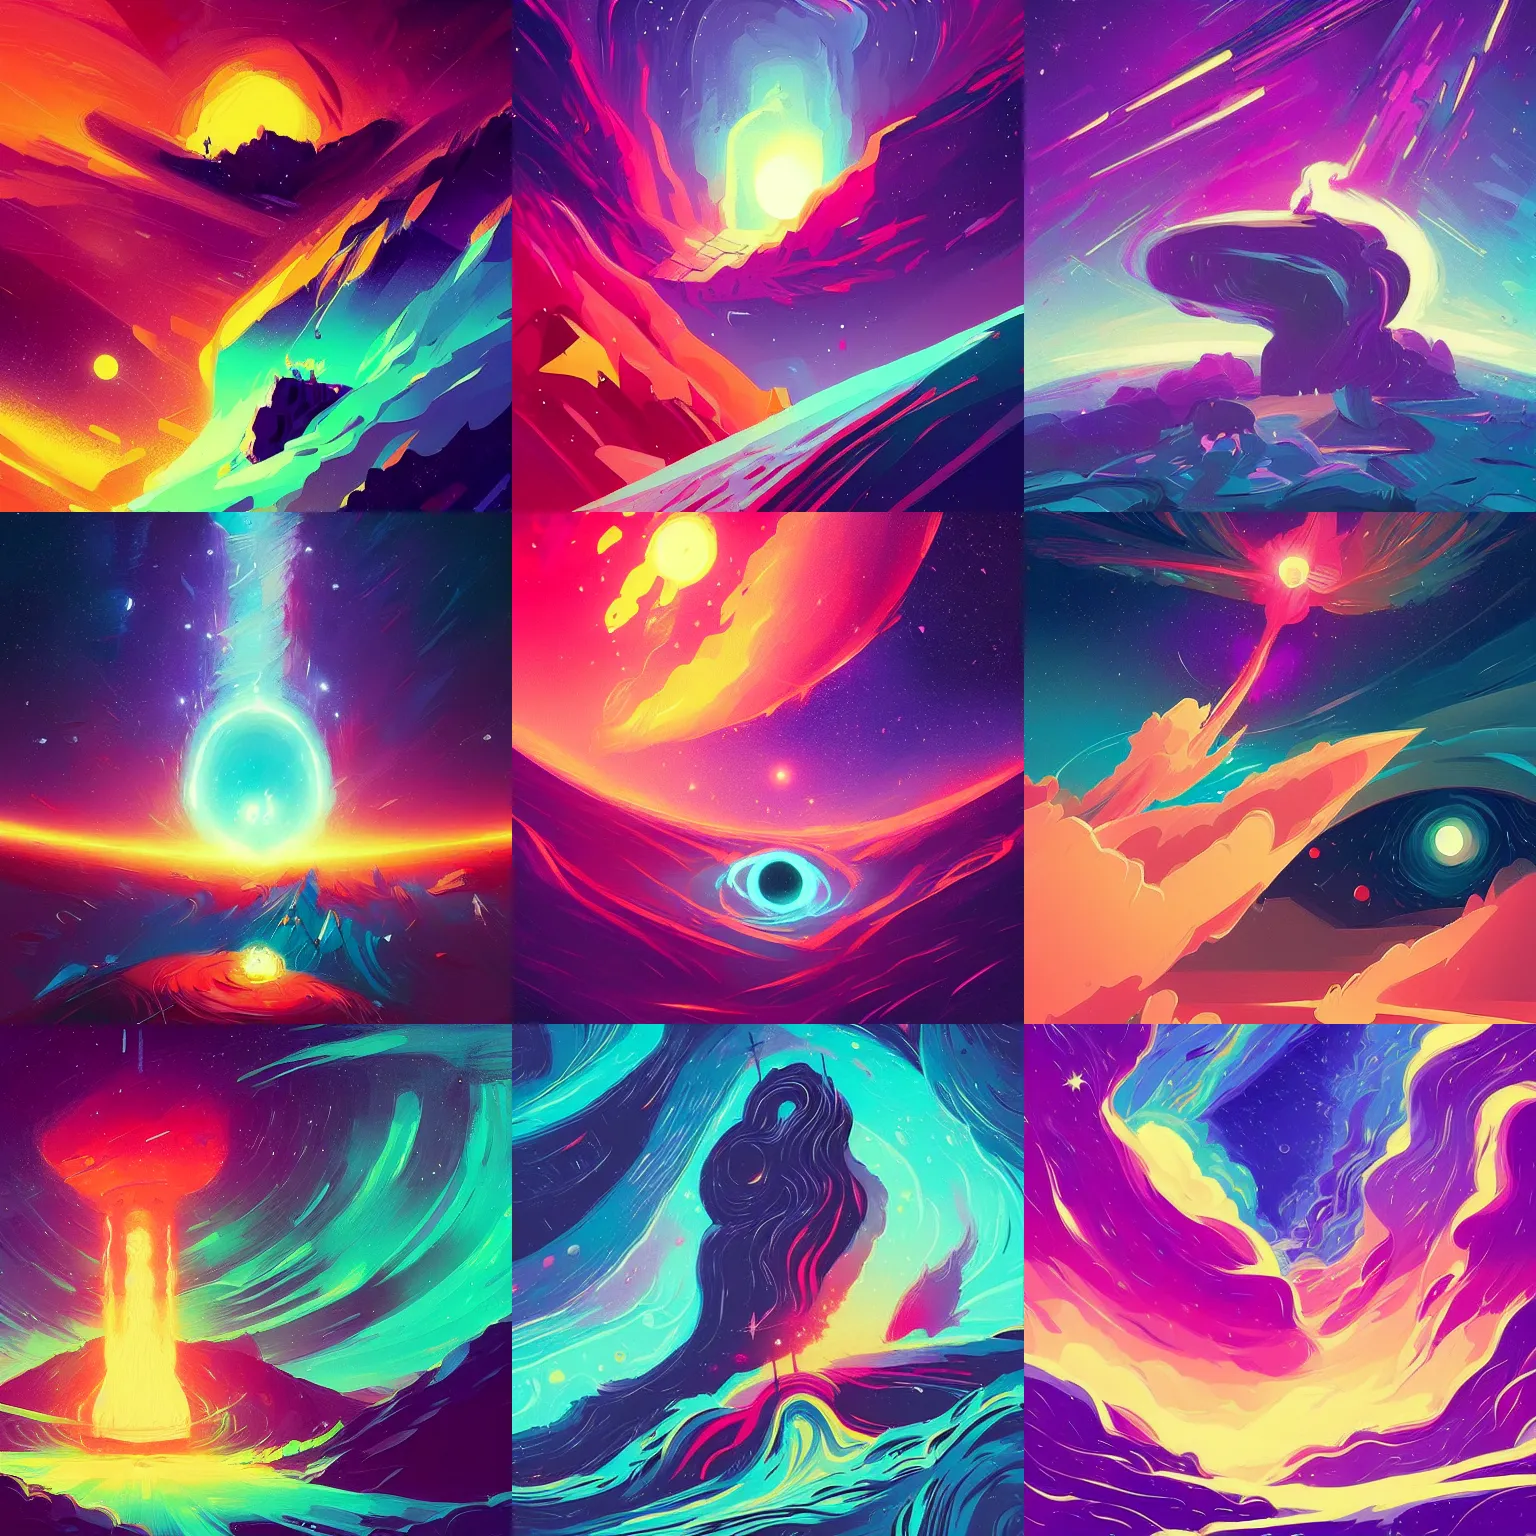 Prompt: space nebula, black hole, by anton fadeev, alena aenami, vincent van gogh!!!, digital art, concept art, vibrant, colorful, trending on artstation